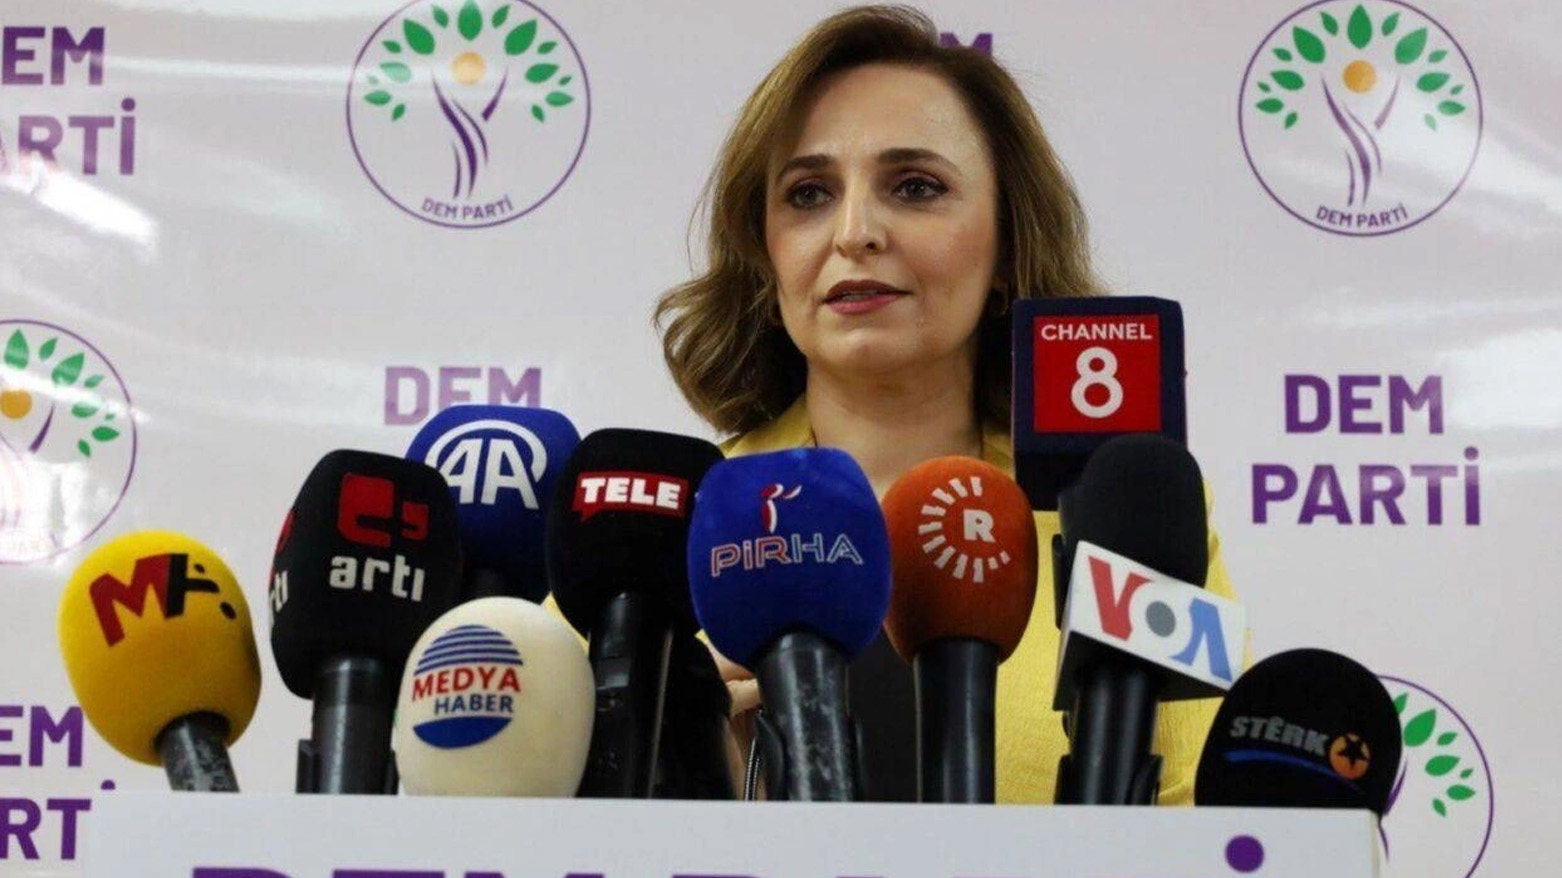 The spokesperson for the party, Ayşegül Doğan. (Photo: Kurdistan 24)